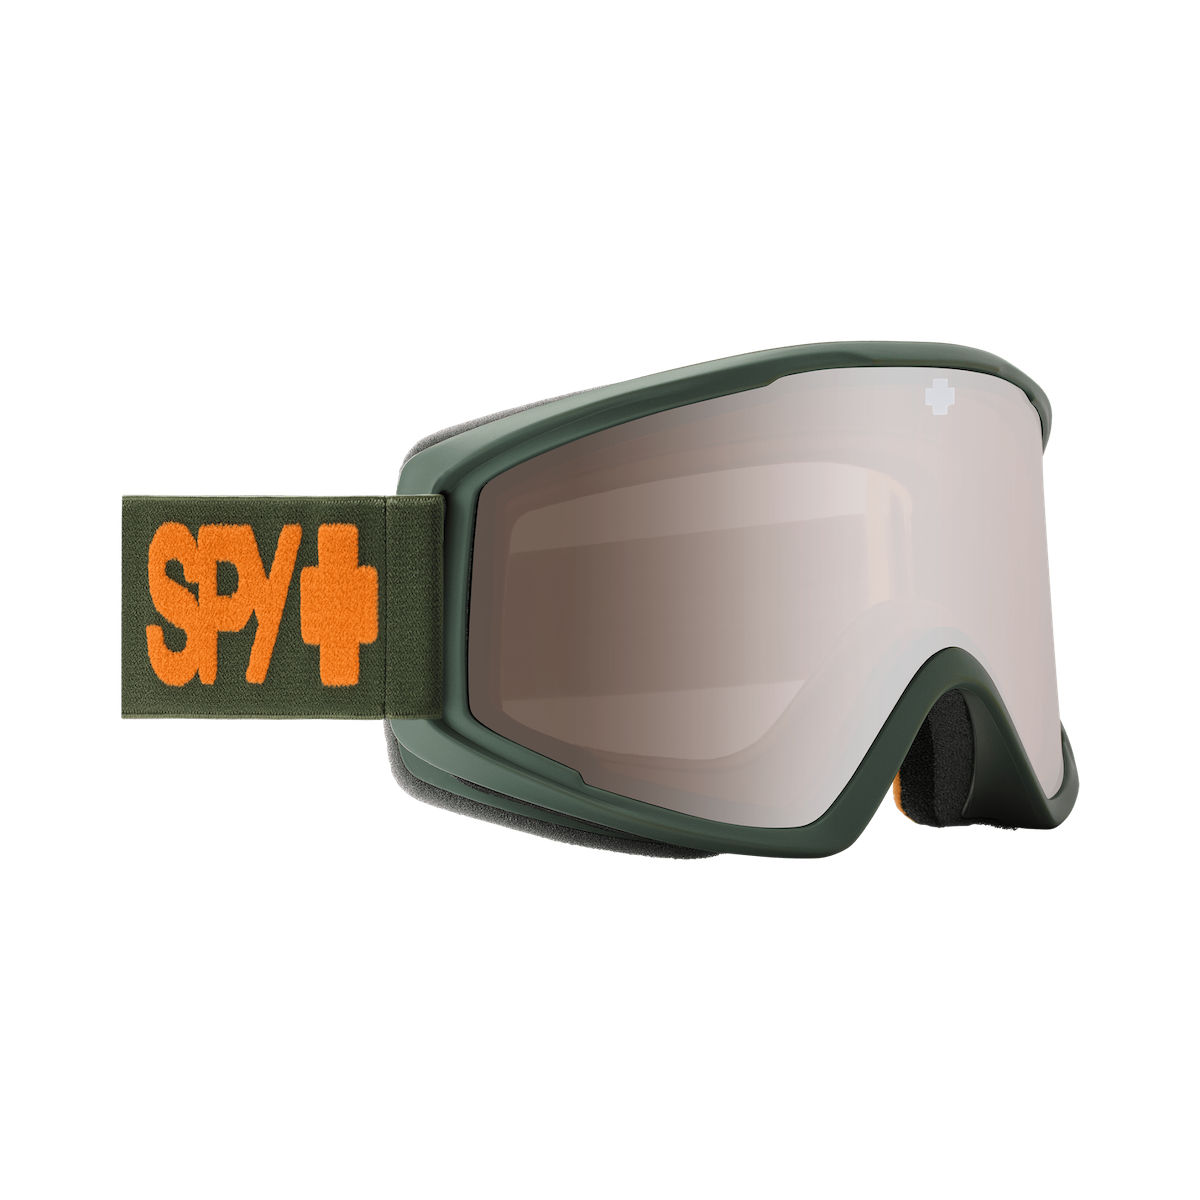 SPY CRUSHER ELITE SNOW goggles - matte steel green